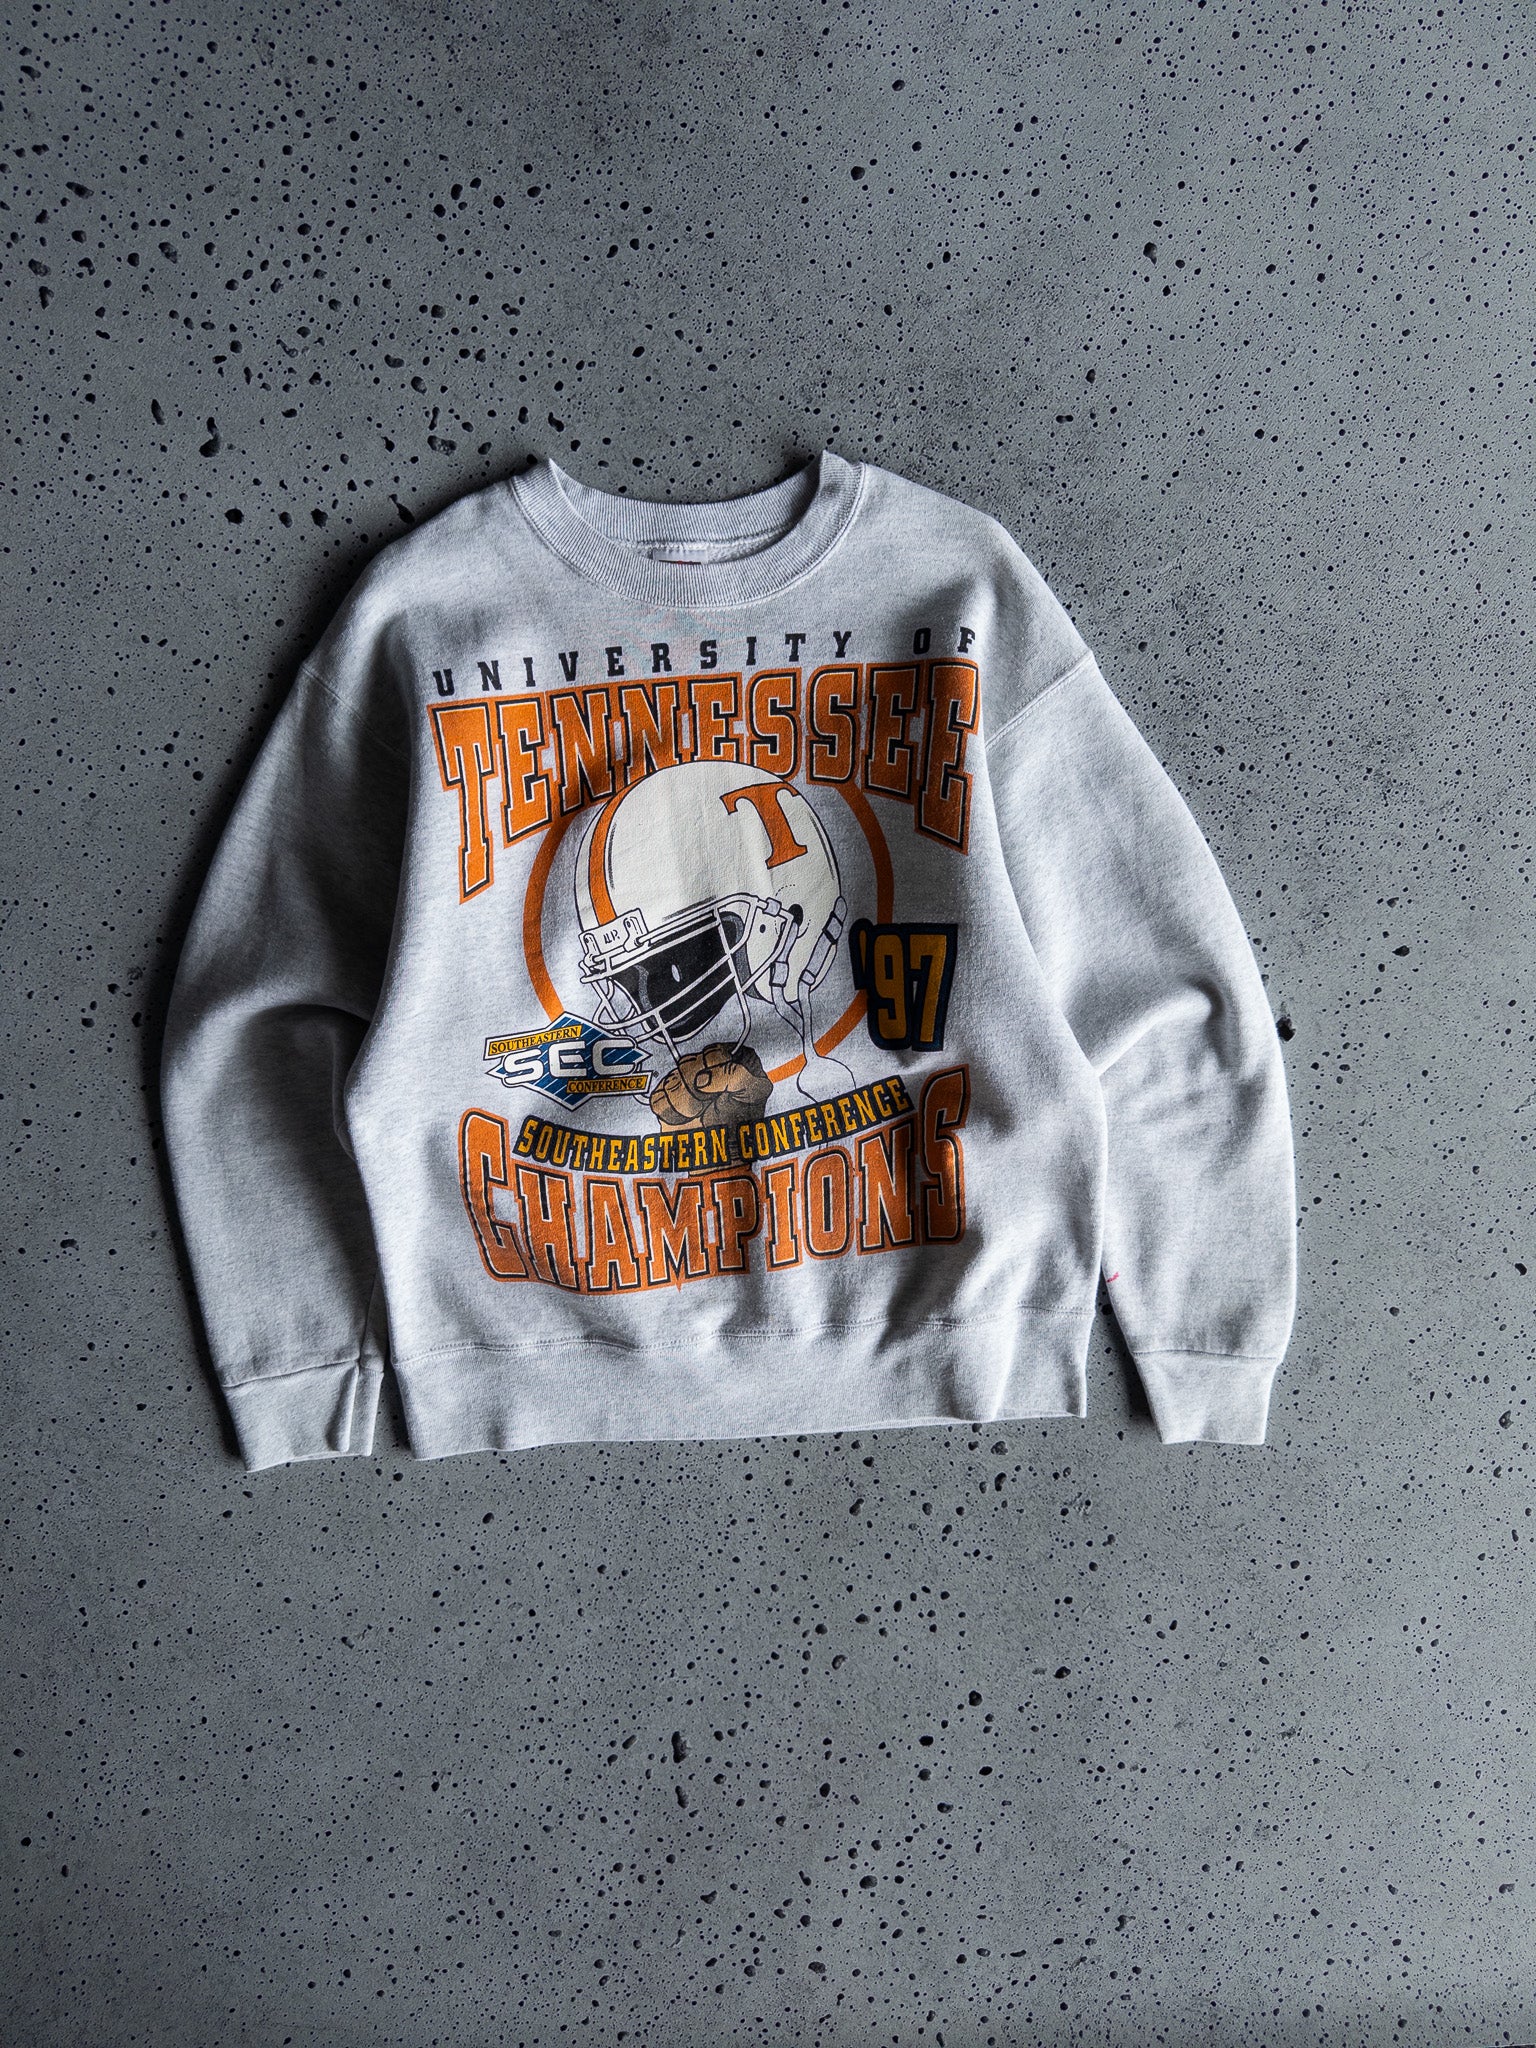 Vintage University of Tennessee 1997 Champions Sweatshirt (M)